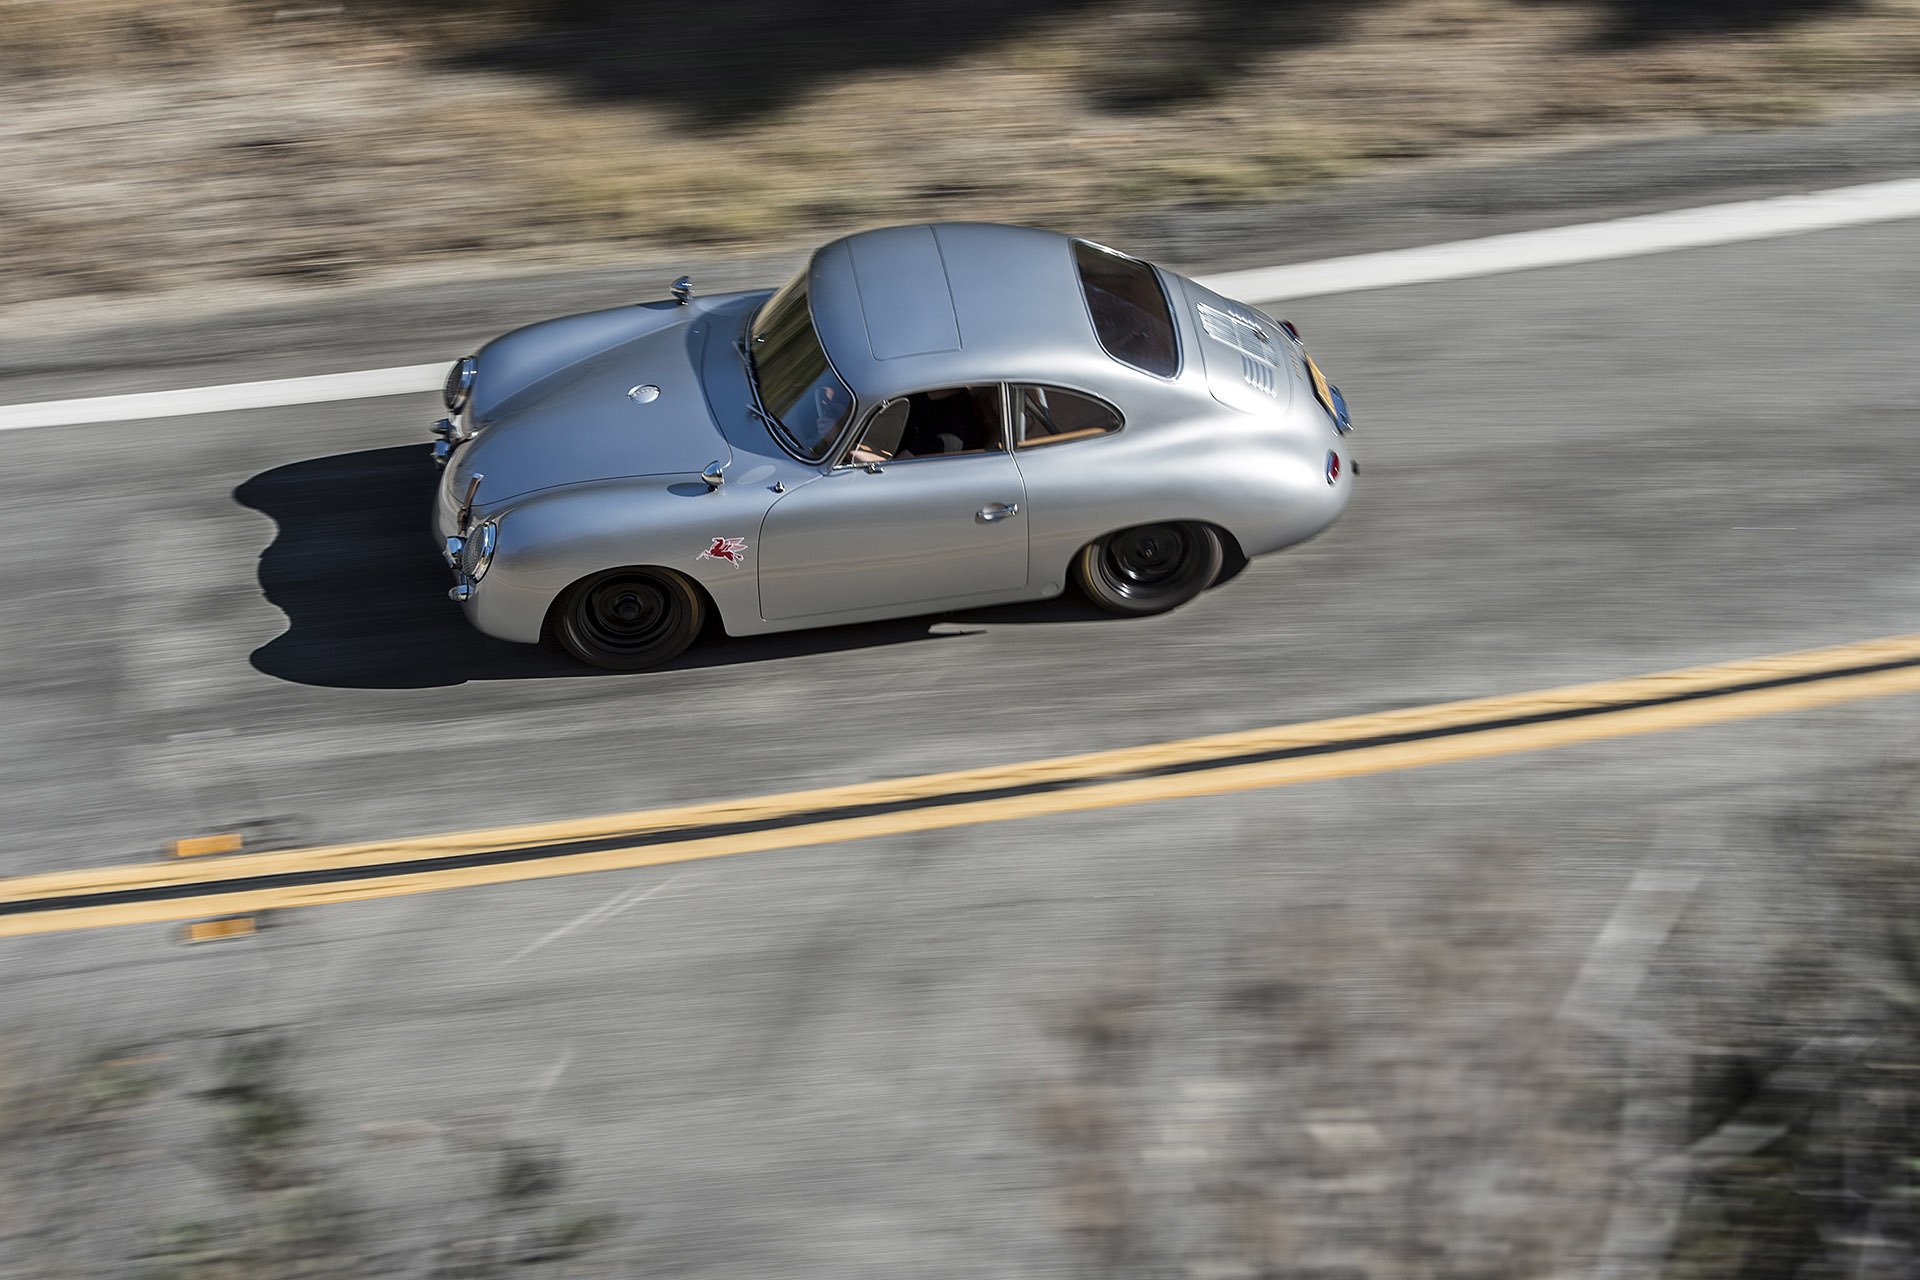 1959, Porsche, 356, Emory, Cars, Coupe, Modified Wallpaper